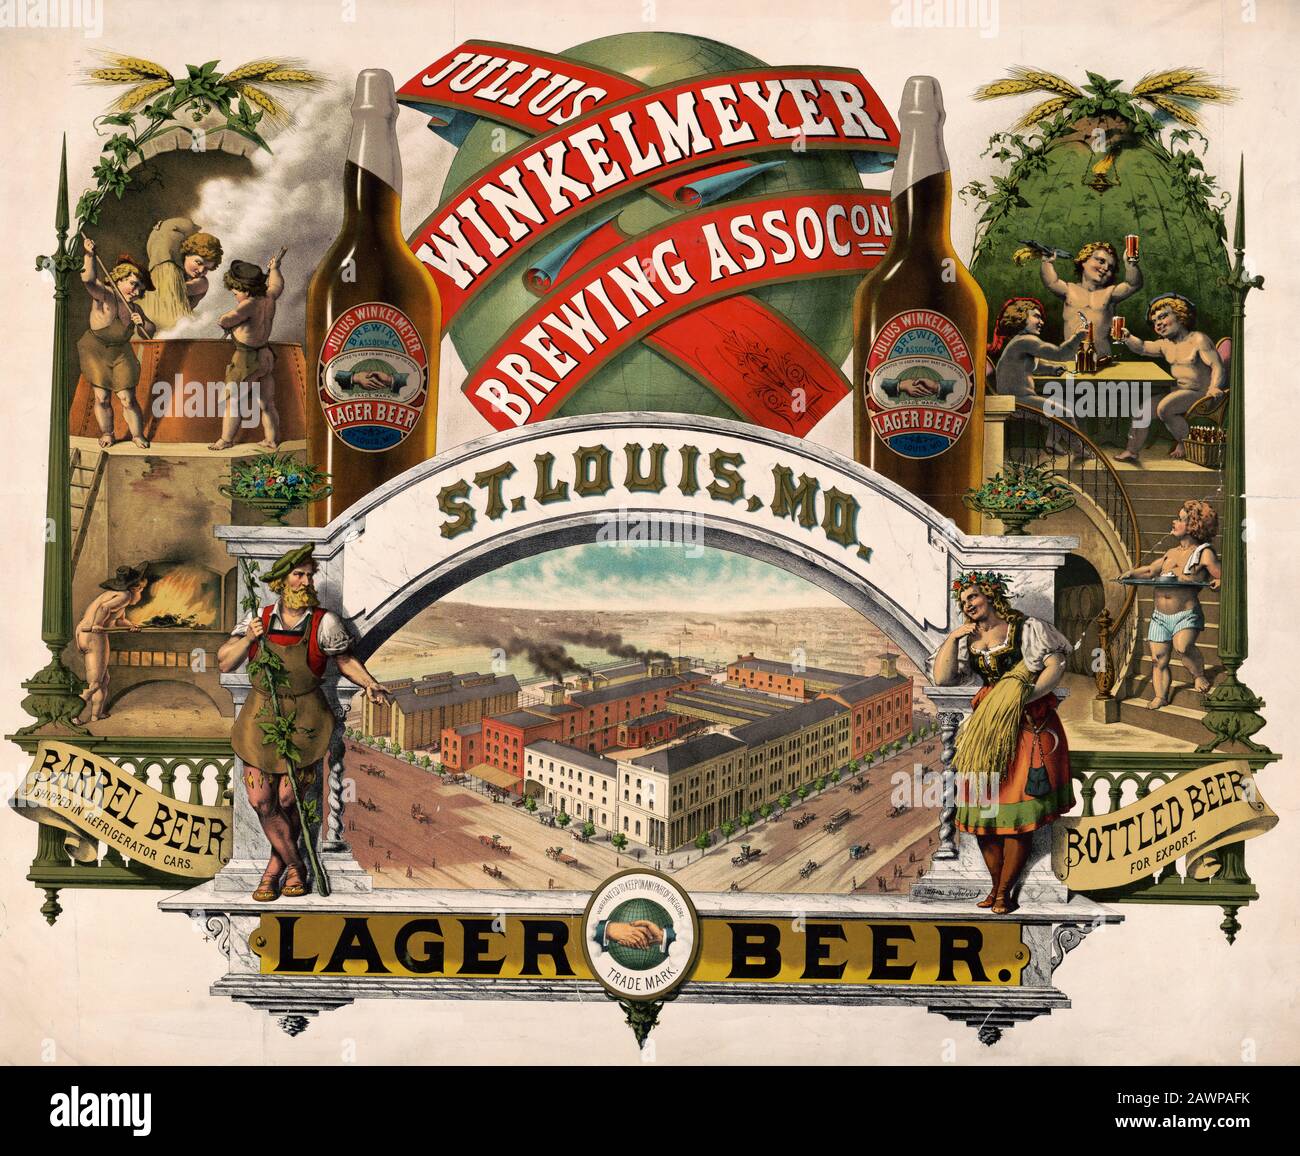 Julius Winkelmeyer Brewing Association, St. Louis, Missouri, Cerveza Lager Foto de stock